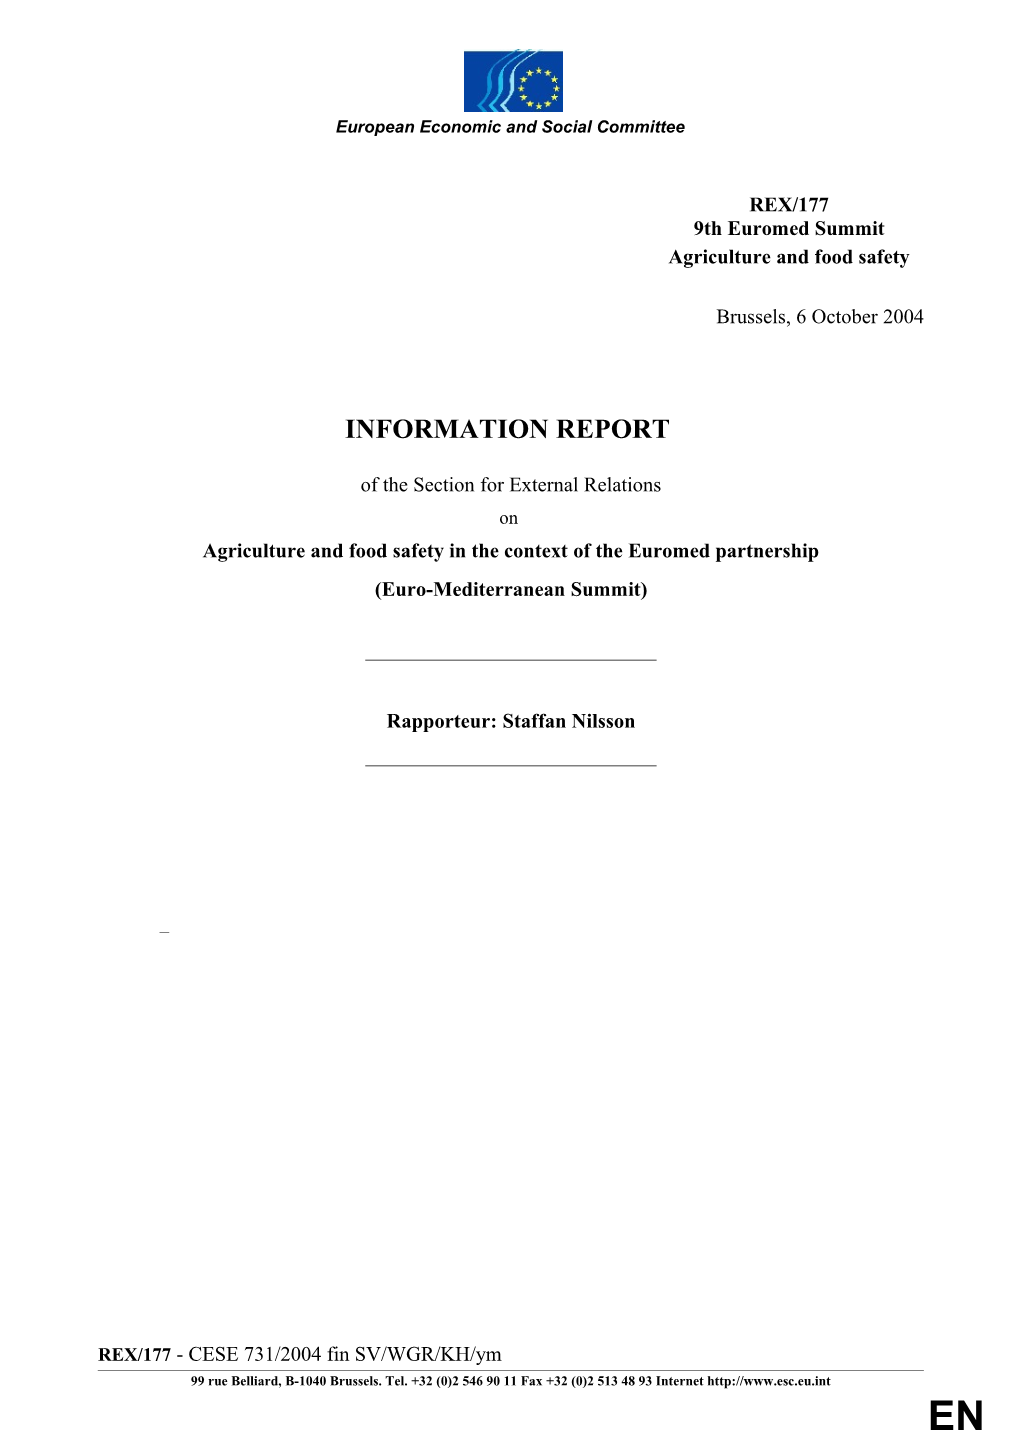 Information Report CES731-2004 FIN RI EN